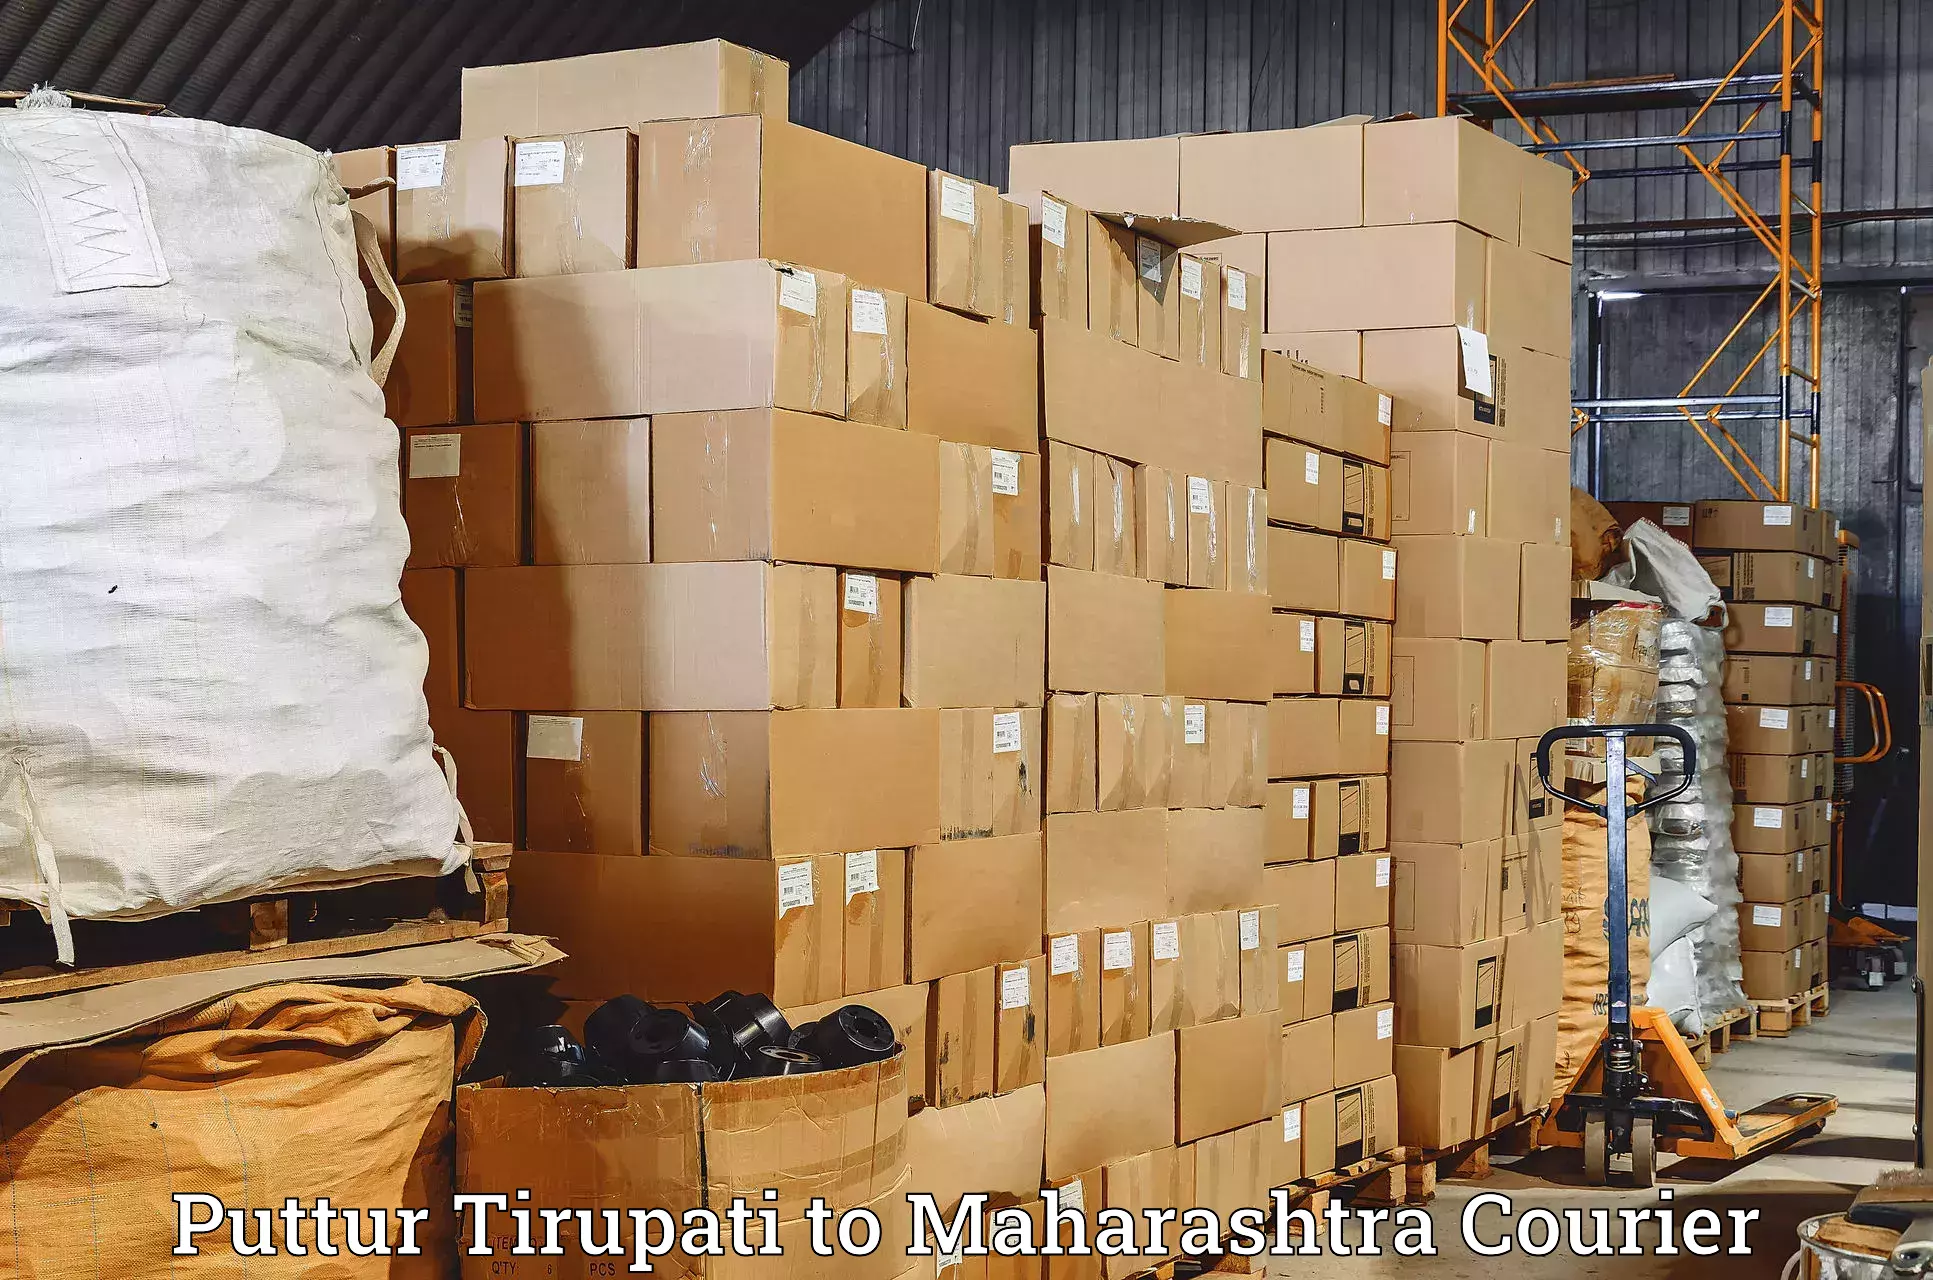 Personalized courier experiences Puttur Tirupati to Maharashtra